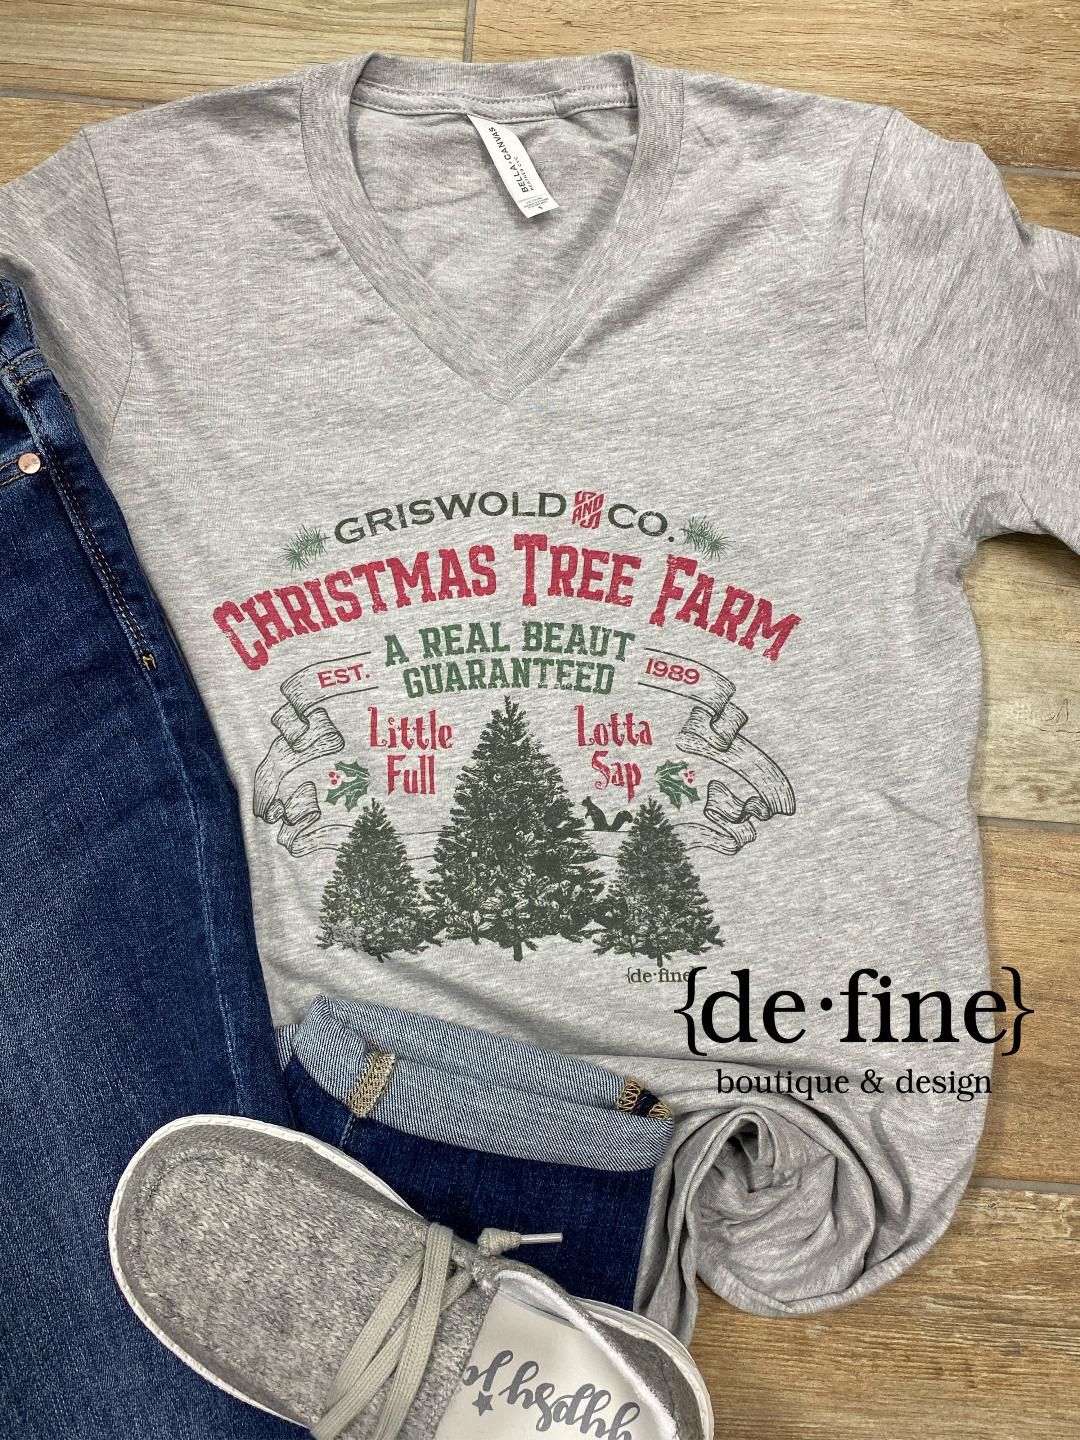 Griswold Christmas Tree Farm Sweatshirt or Tee